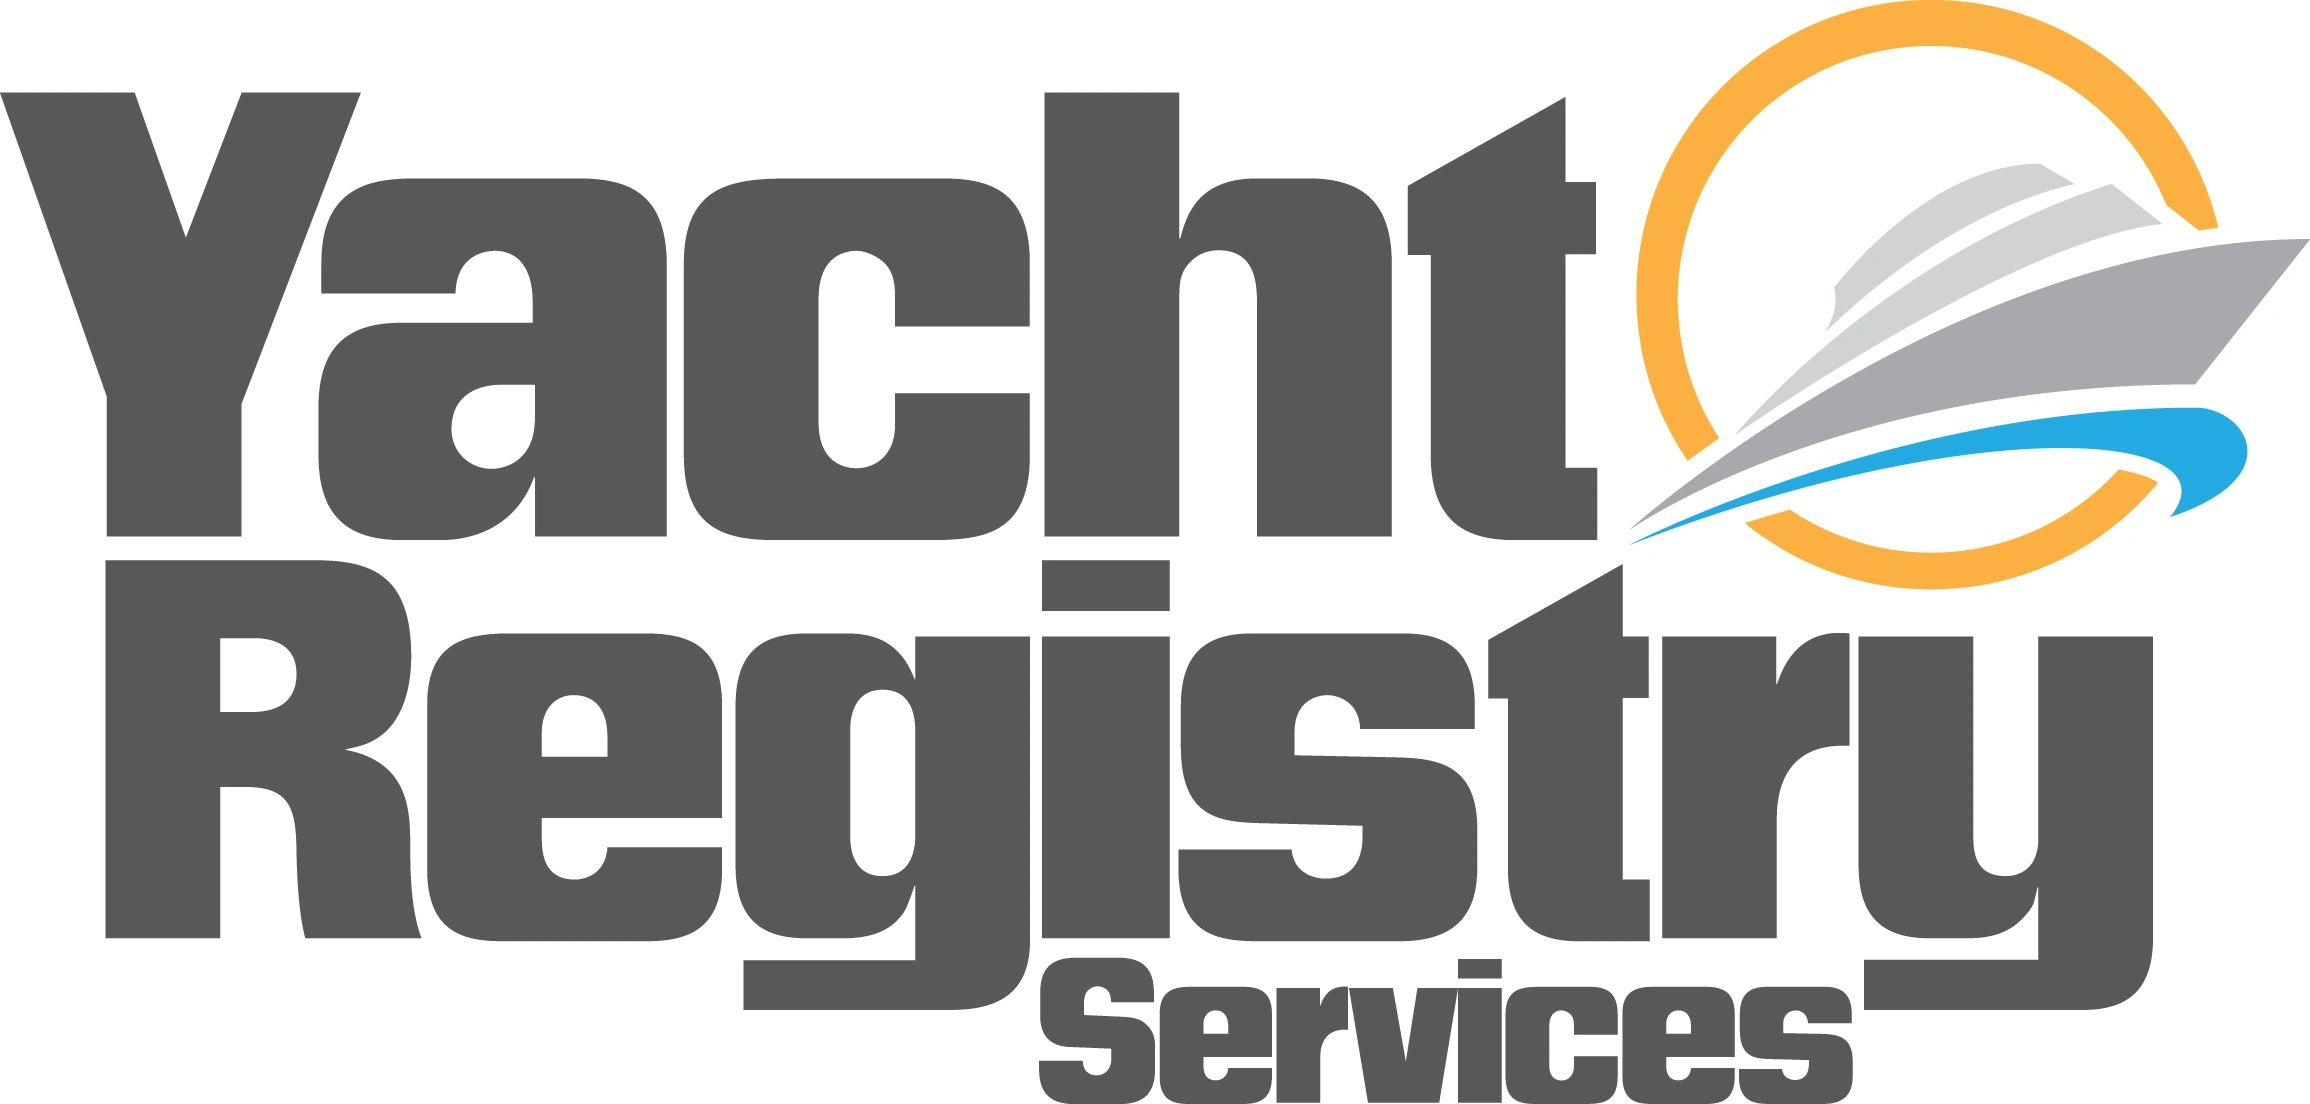 yacht name registry